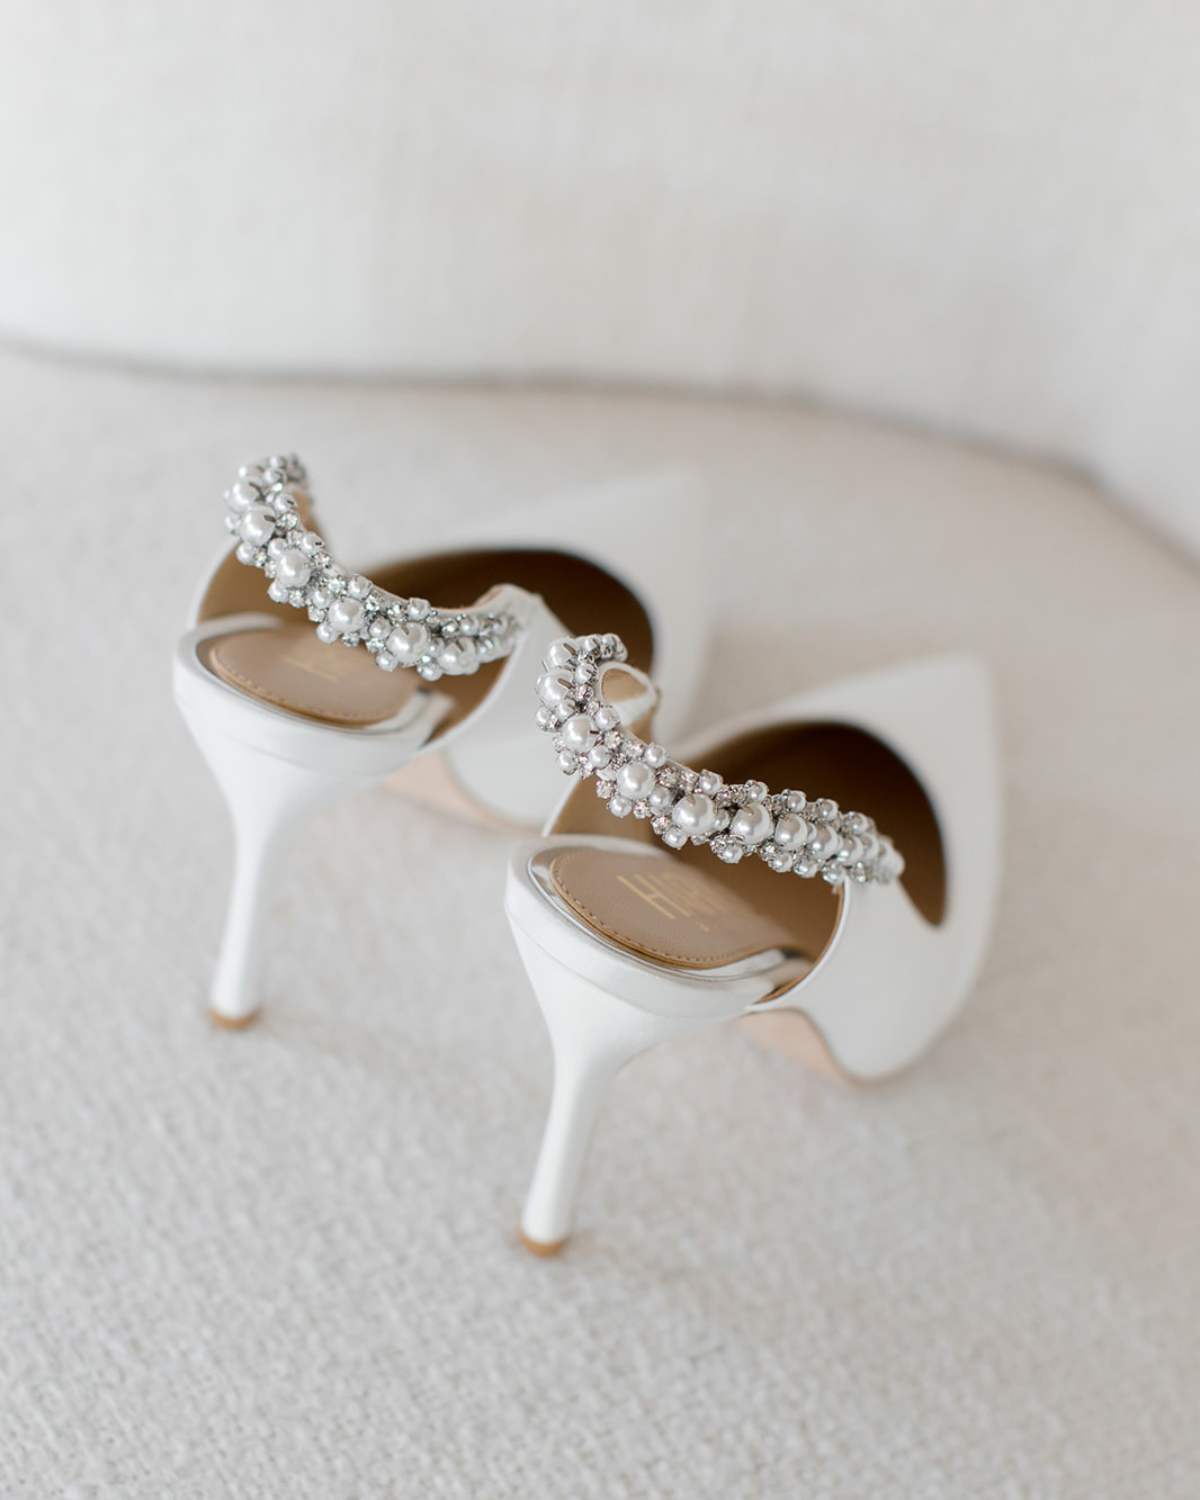 Bonnie Pearl - Pearl & Crystal Embellished Sling Back Bridal Pump - Soft White